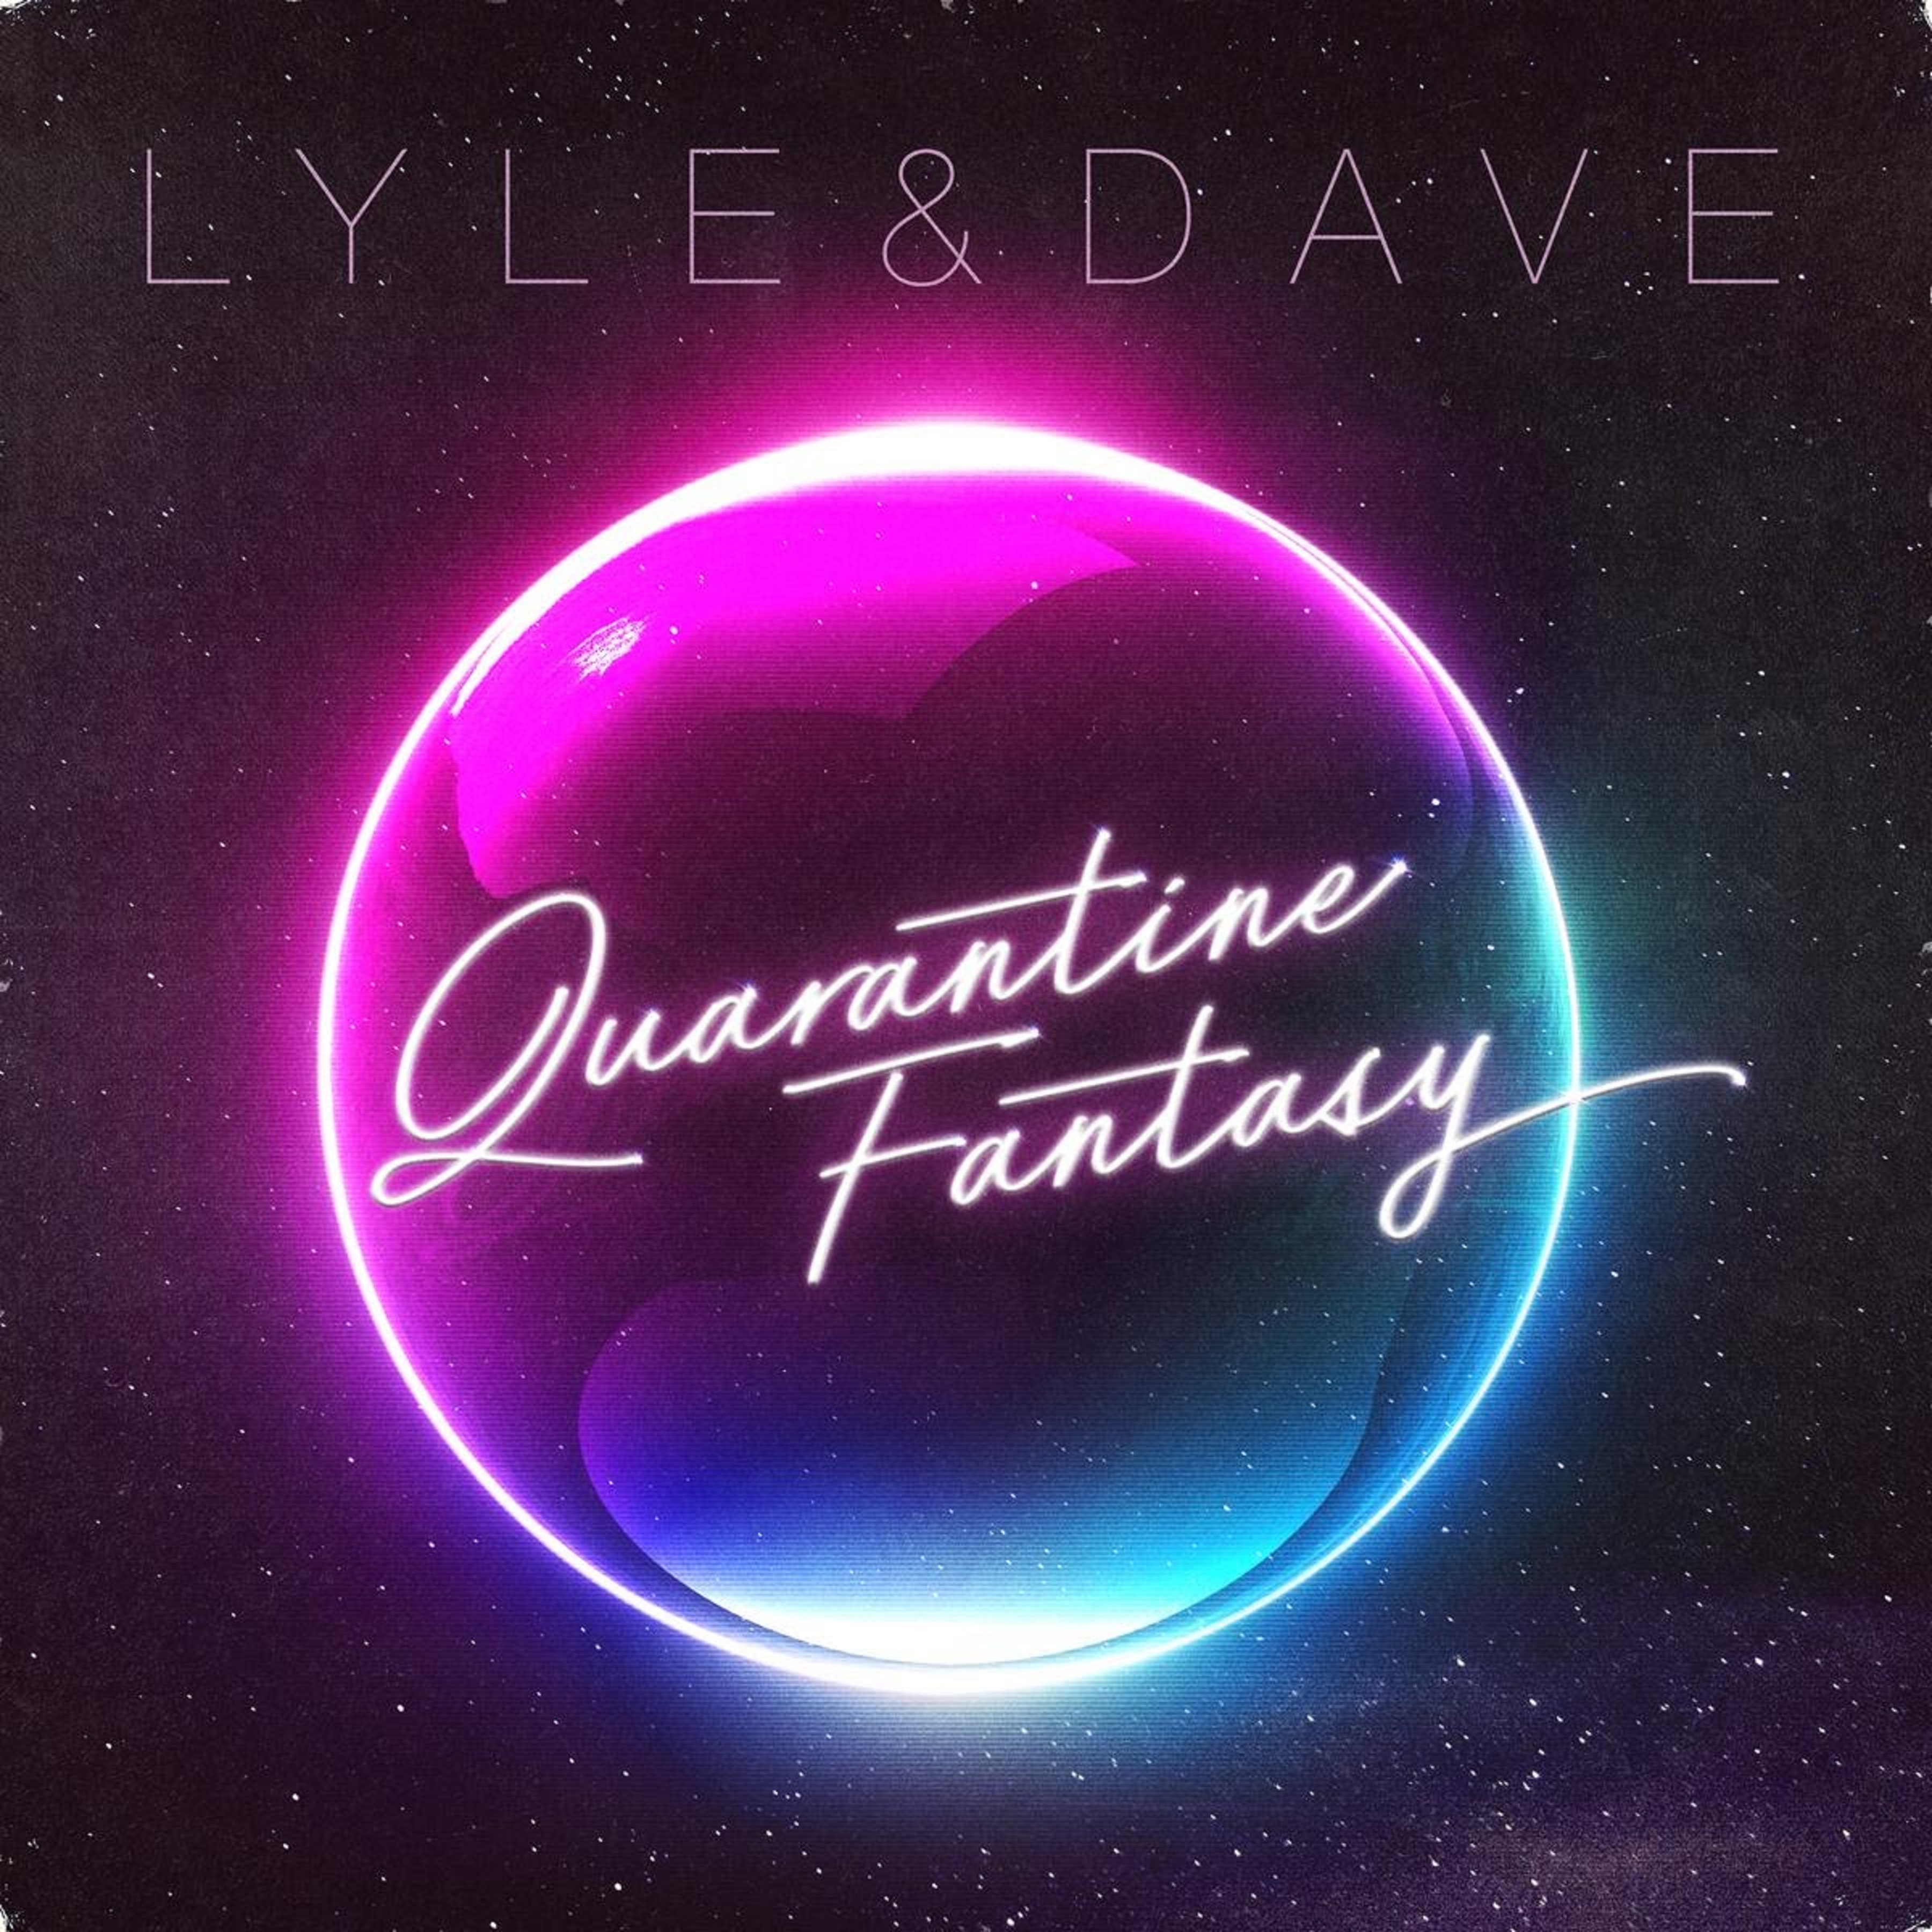 The Motet's Lyle & Dave release new single "Quarantine Fantasy"